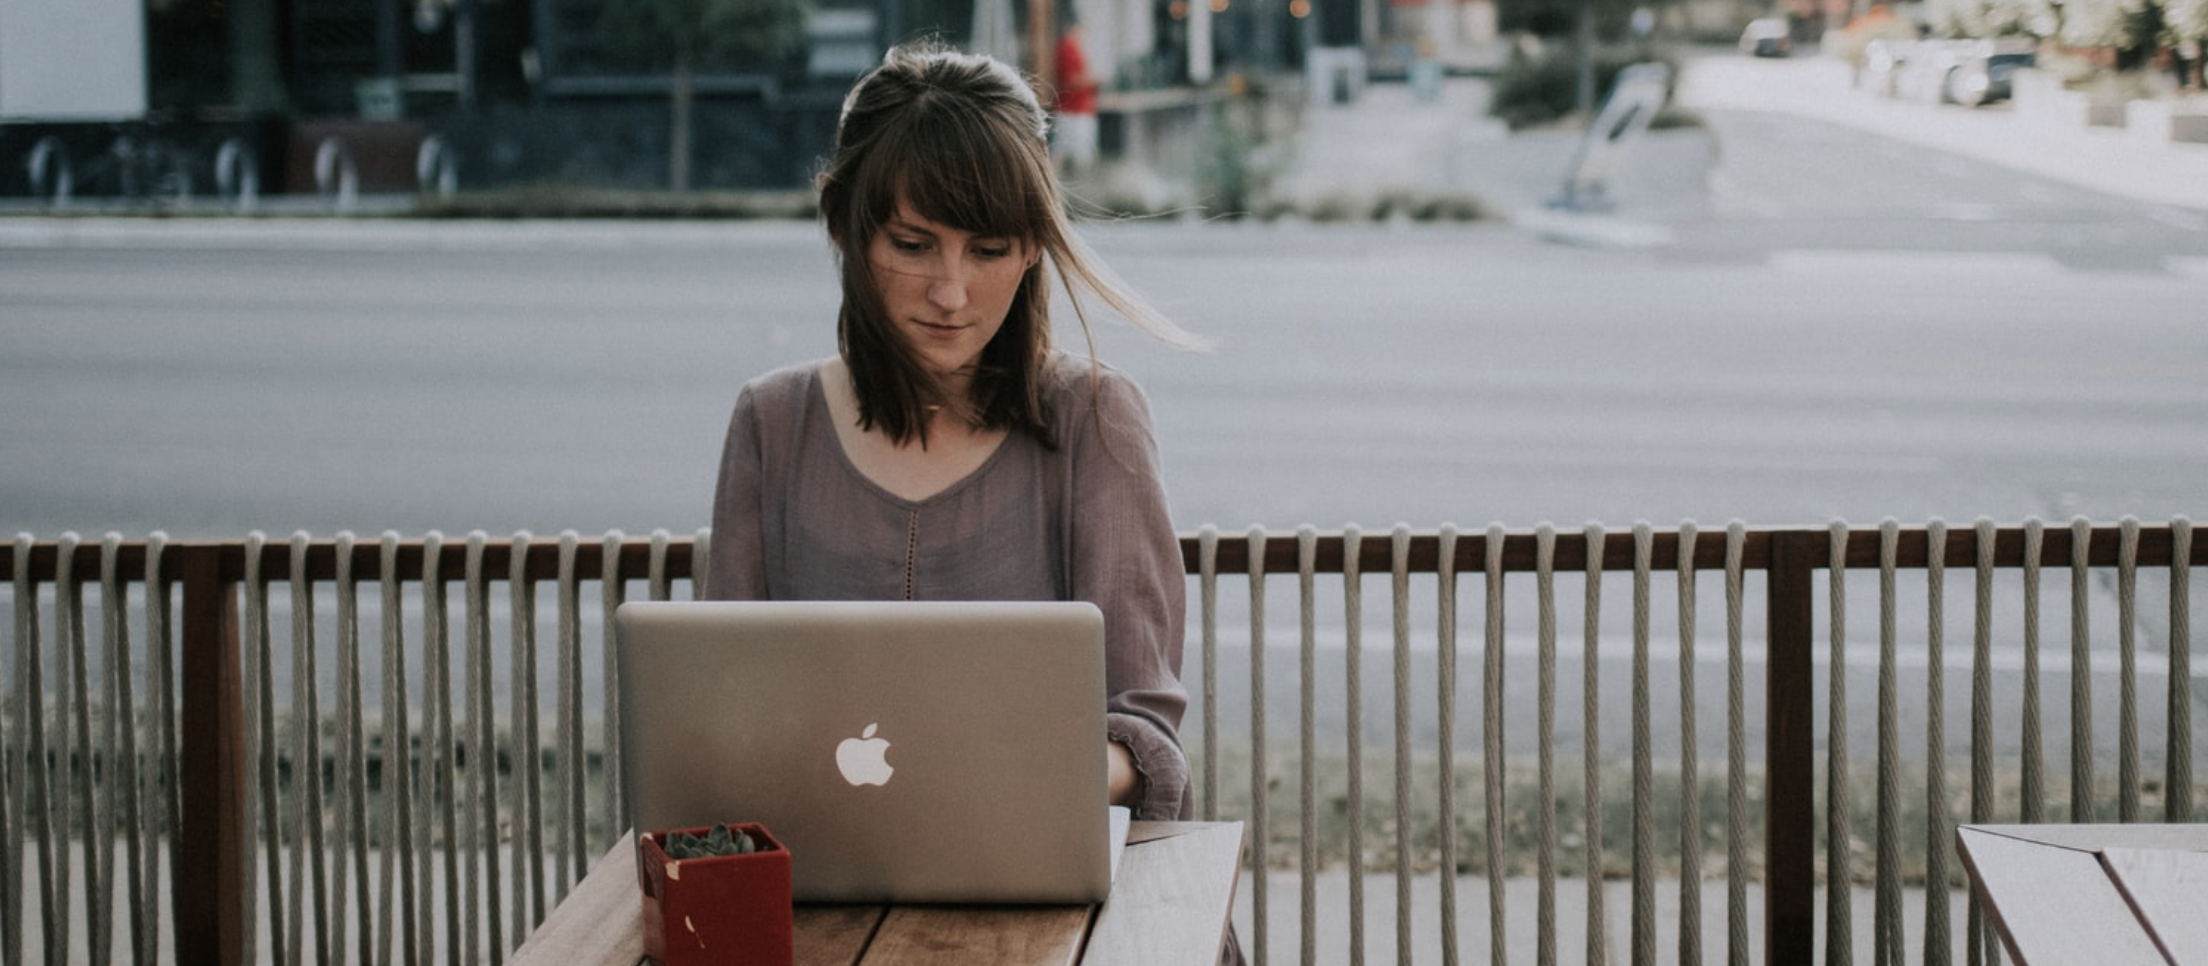 Woman in grey shirt using Mac laptop at a coffee shop